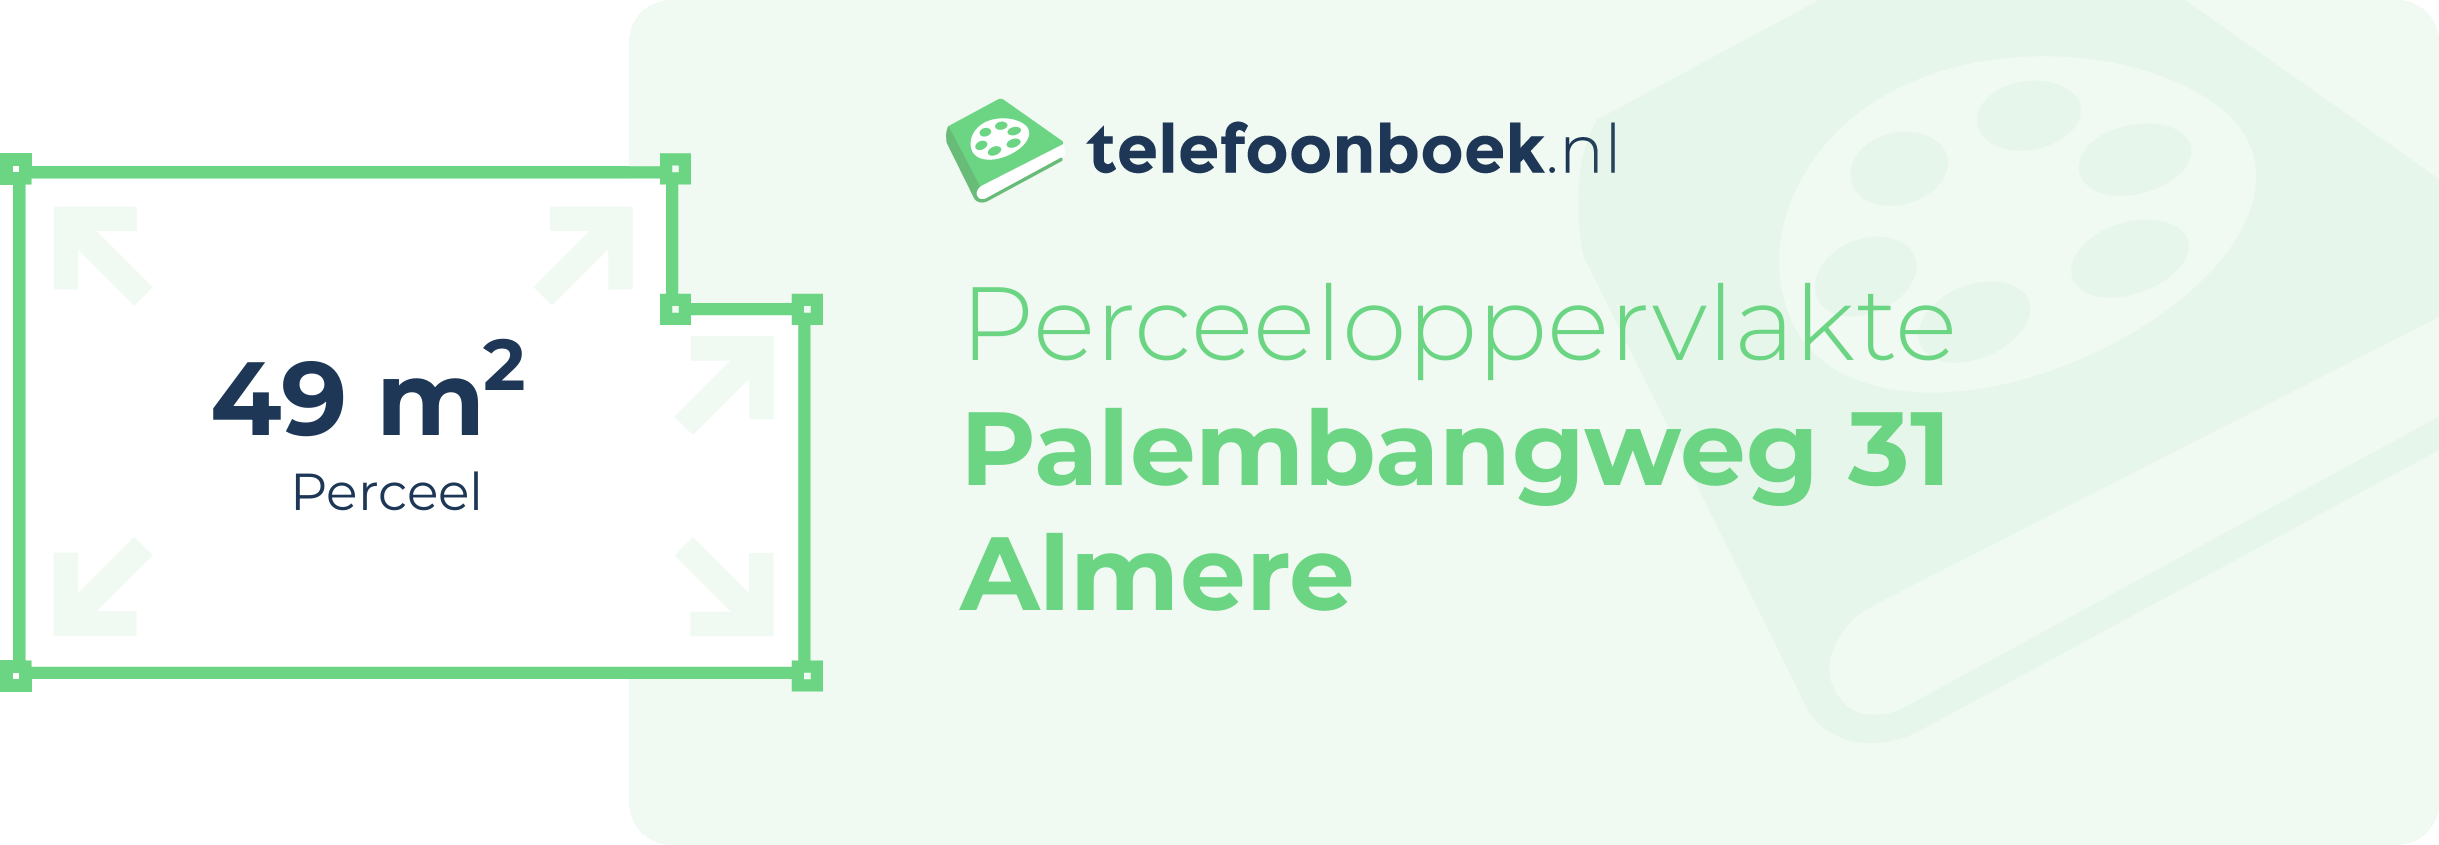 Perceeloppervlakte Palembangweg 31 Almere